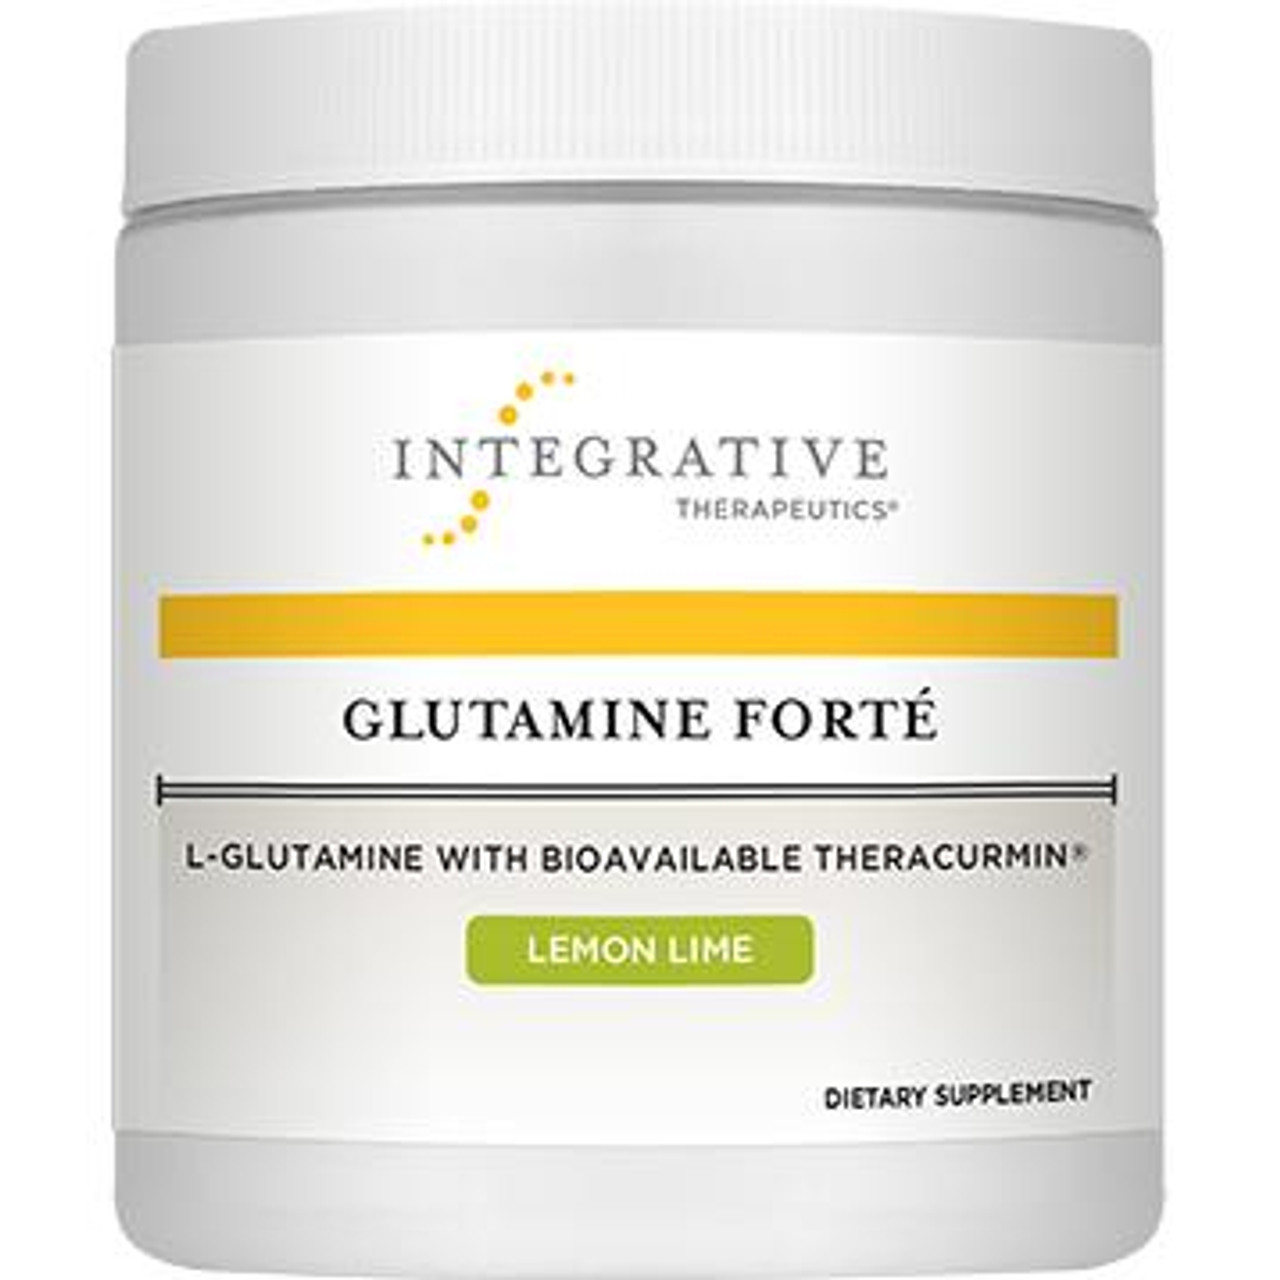 Integrative Therapeutics Glutamine Forte 8.1 oz 